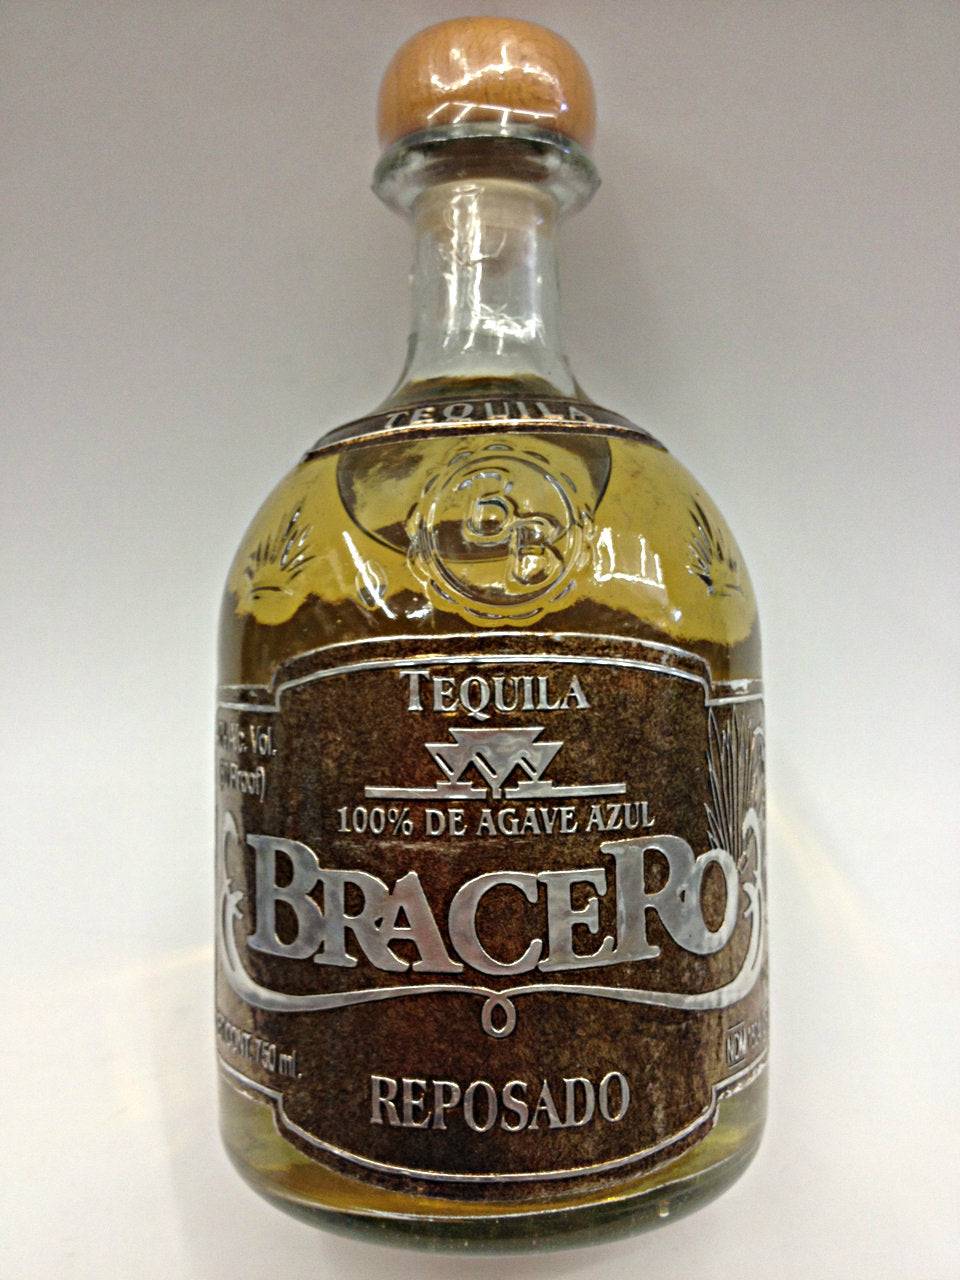 BraceRo Reposado Tequila 750ml - BraceRo